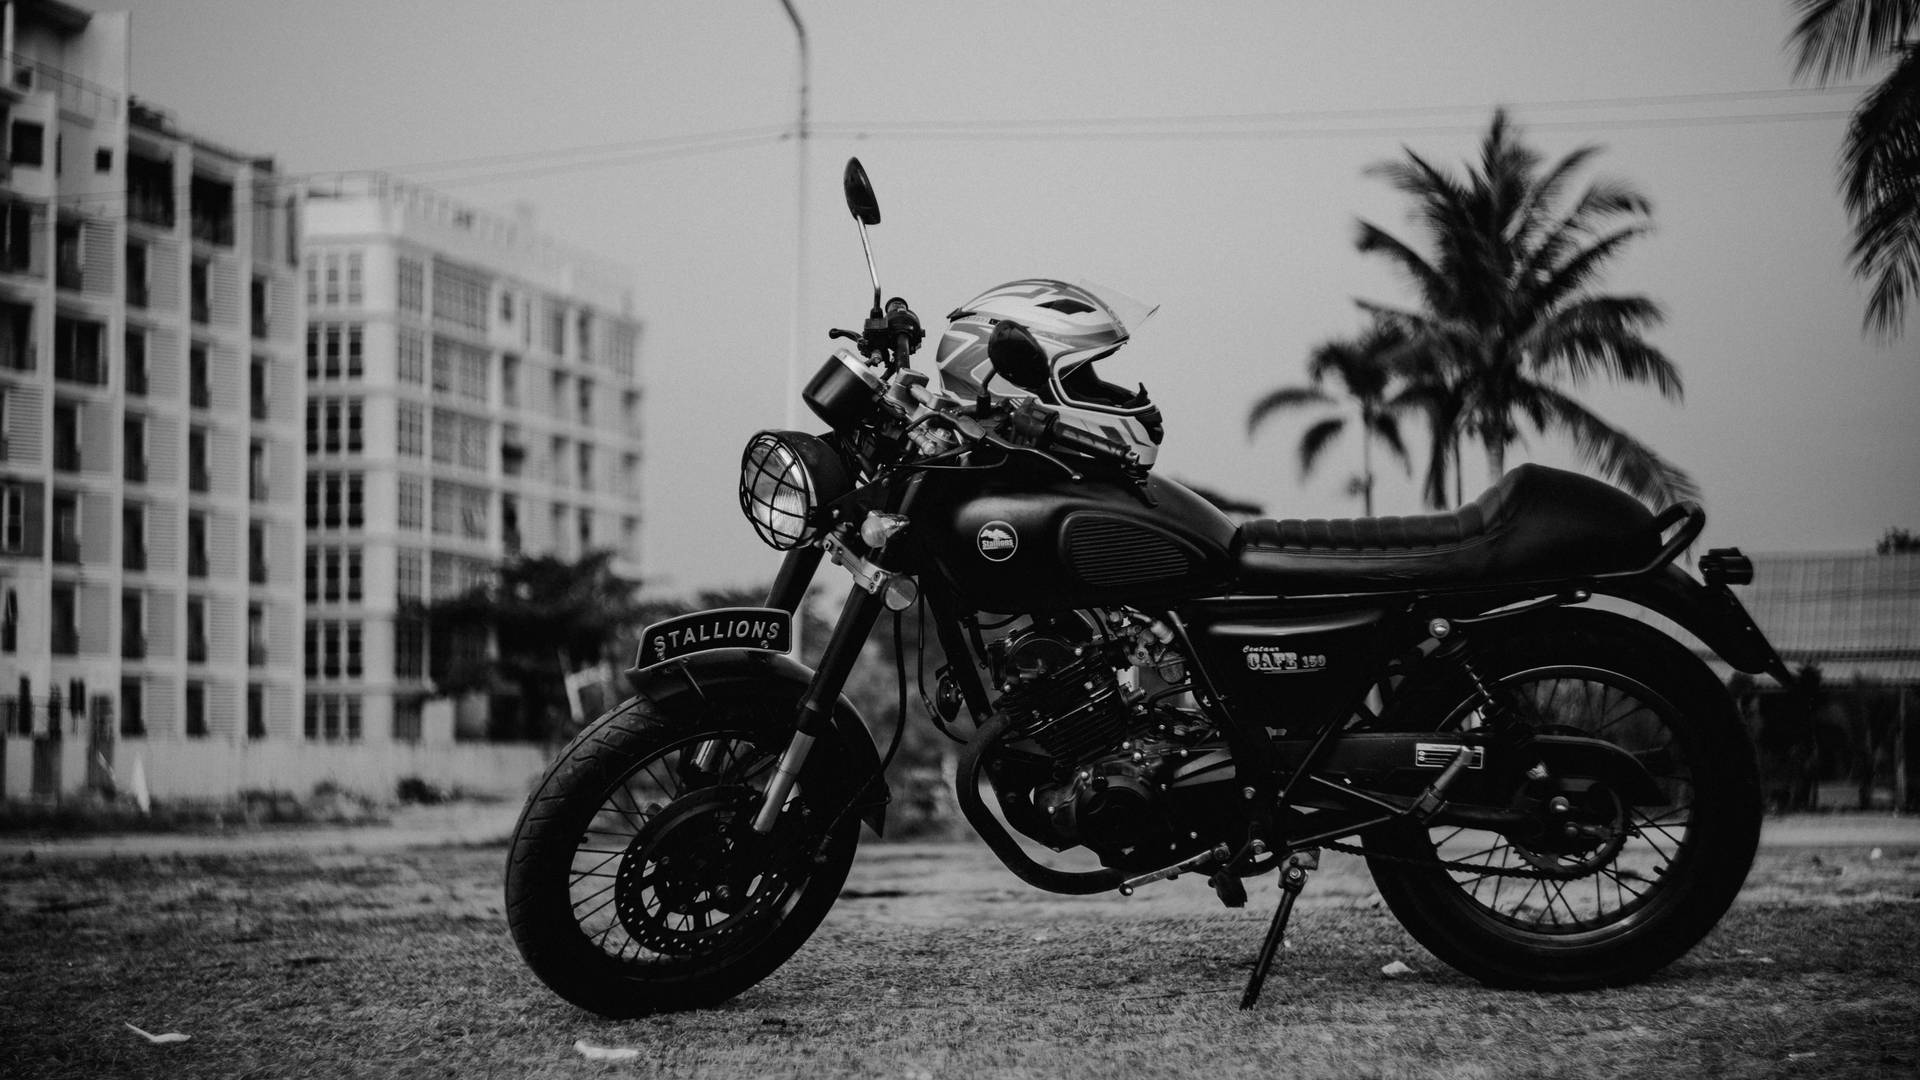 Premium Black Motorcycle in High Definition Wallpaper